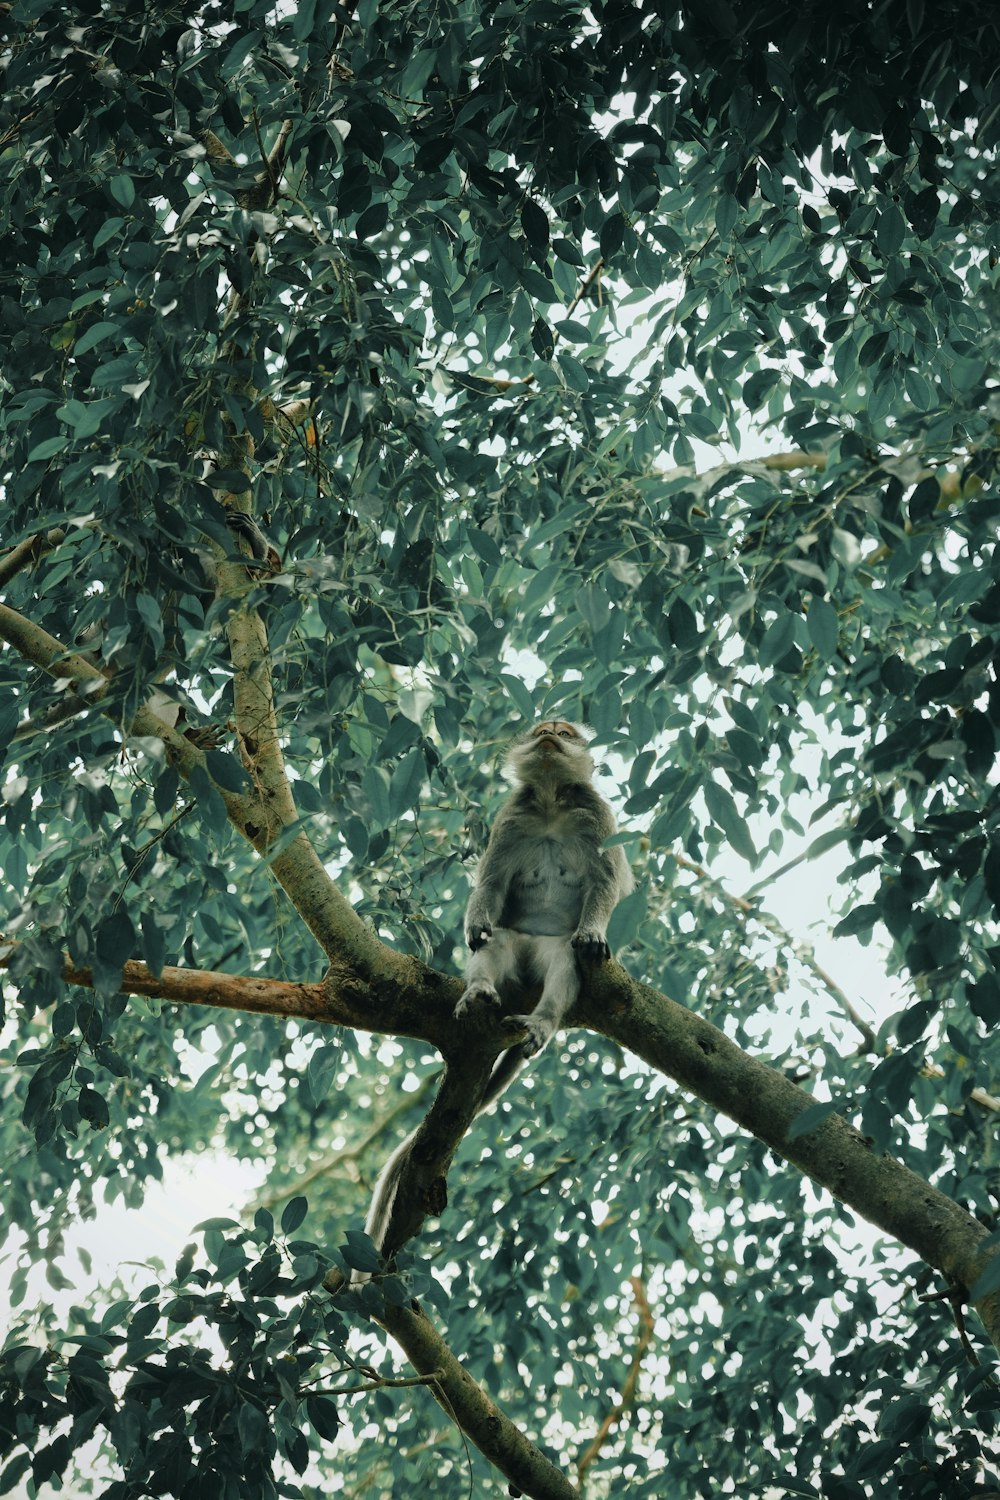 gray baboon monkey on branch of tree